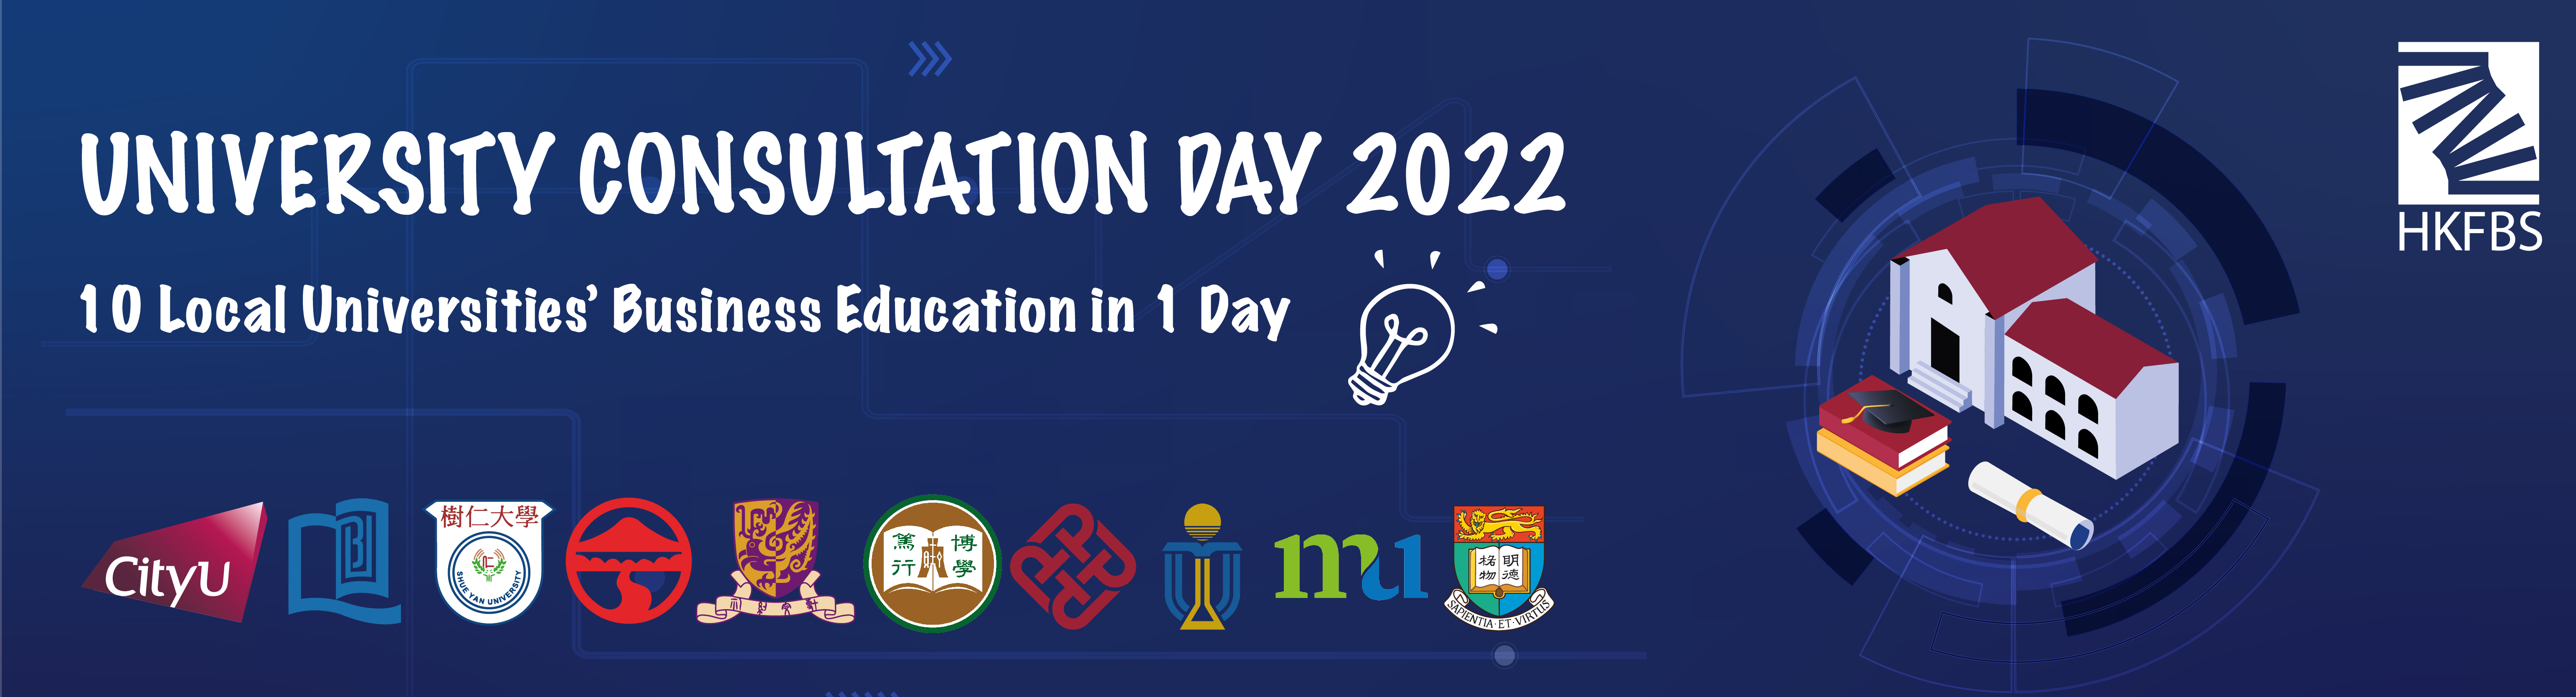 University Consultation Day 2022